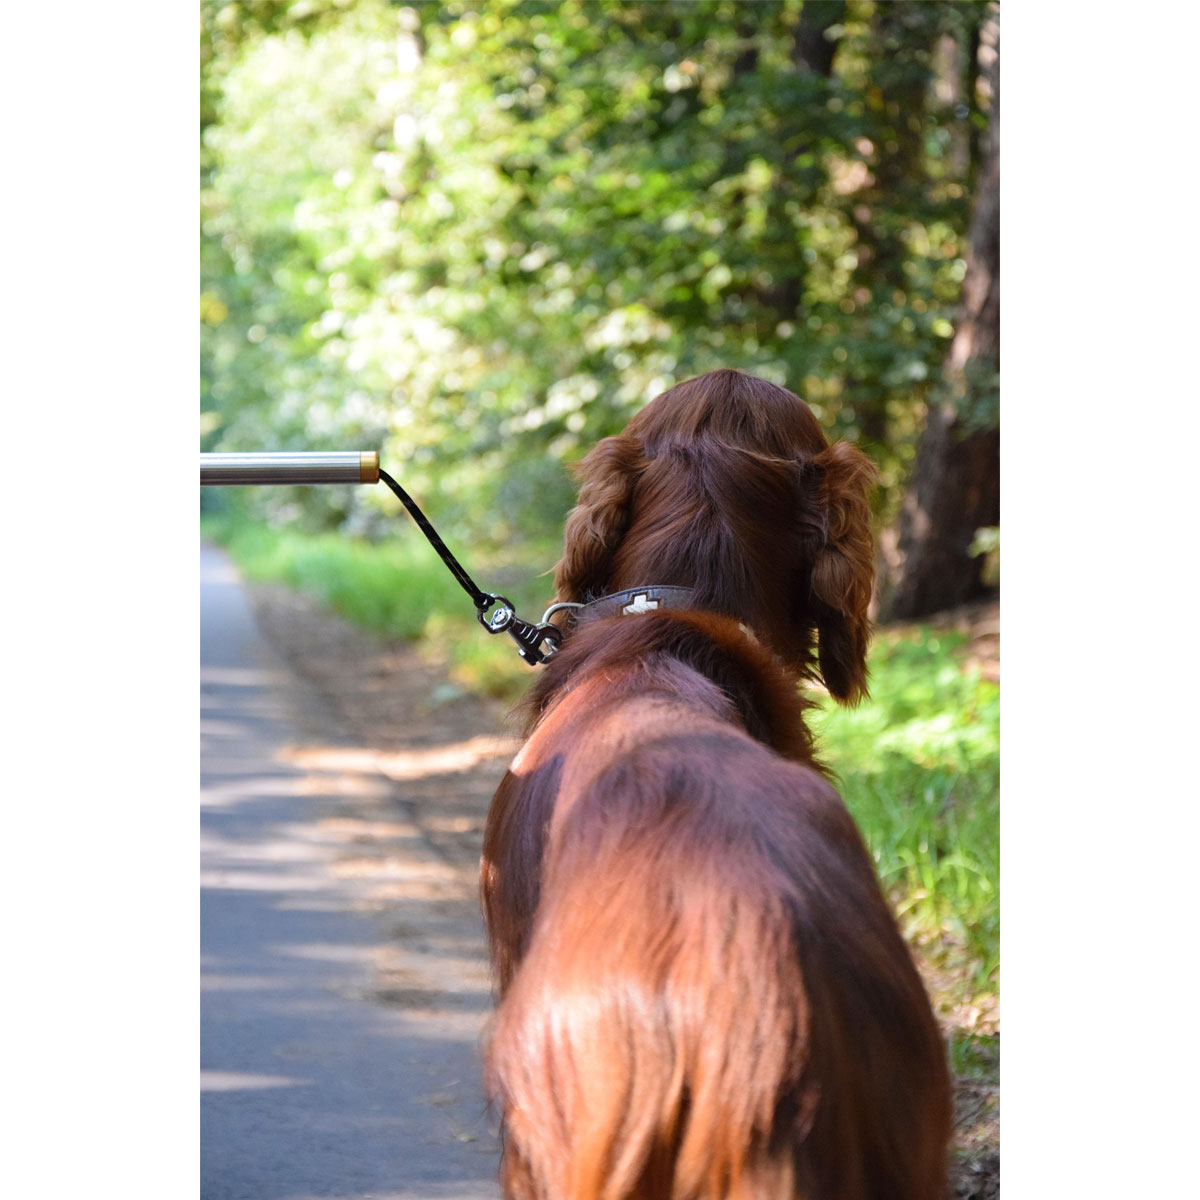 Hundeleine „Walky Dog Plus“, 37,5 cm, silber